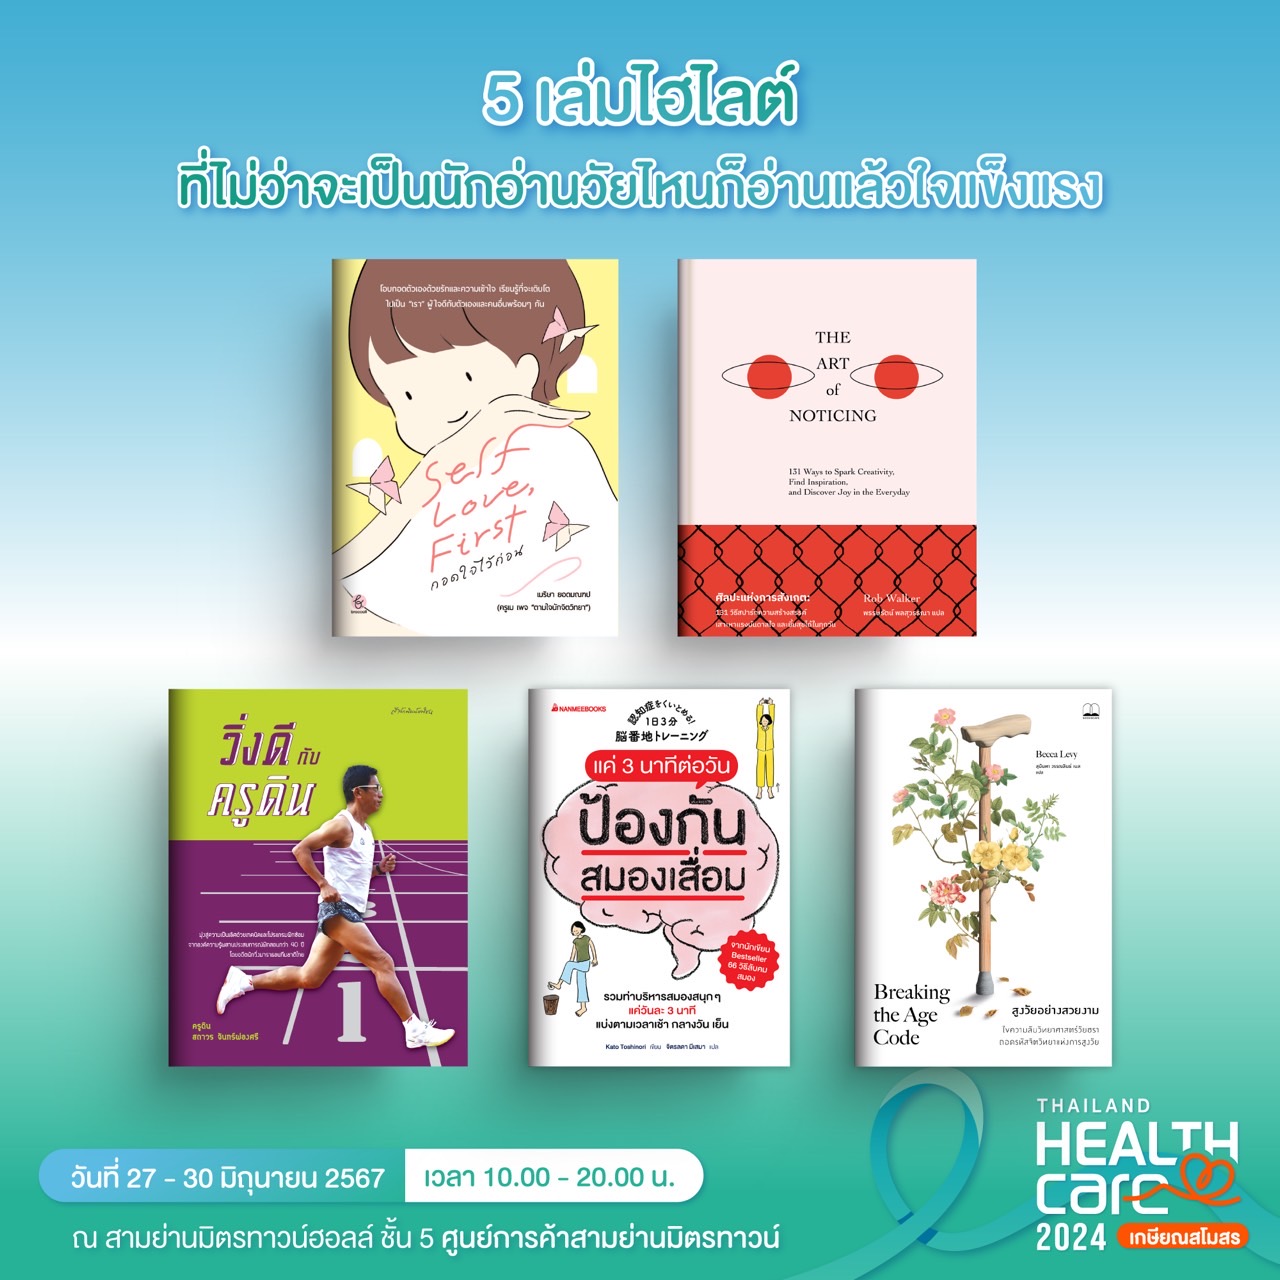 Thailand Healthcare 2024 เกษียณสโมสร